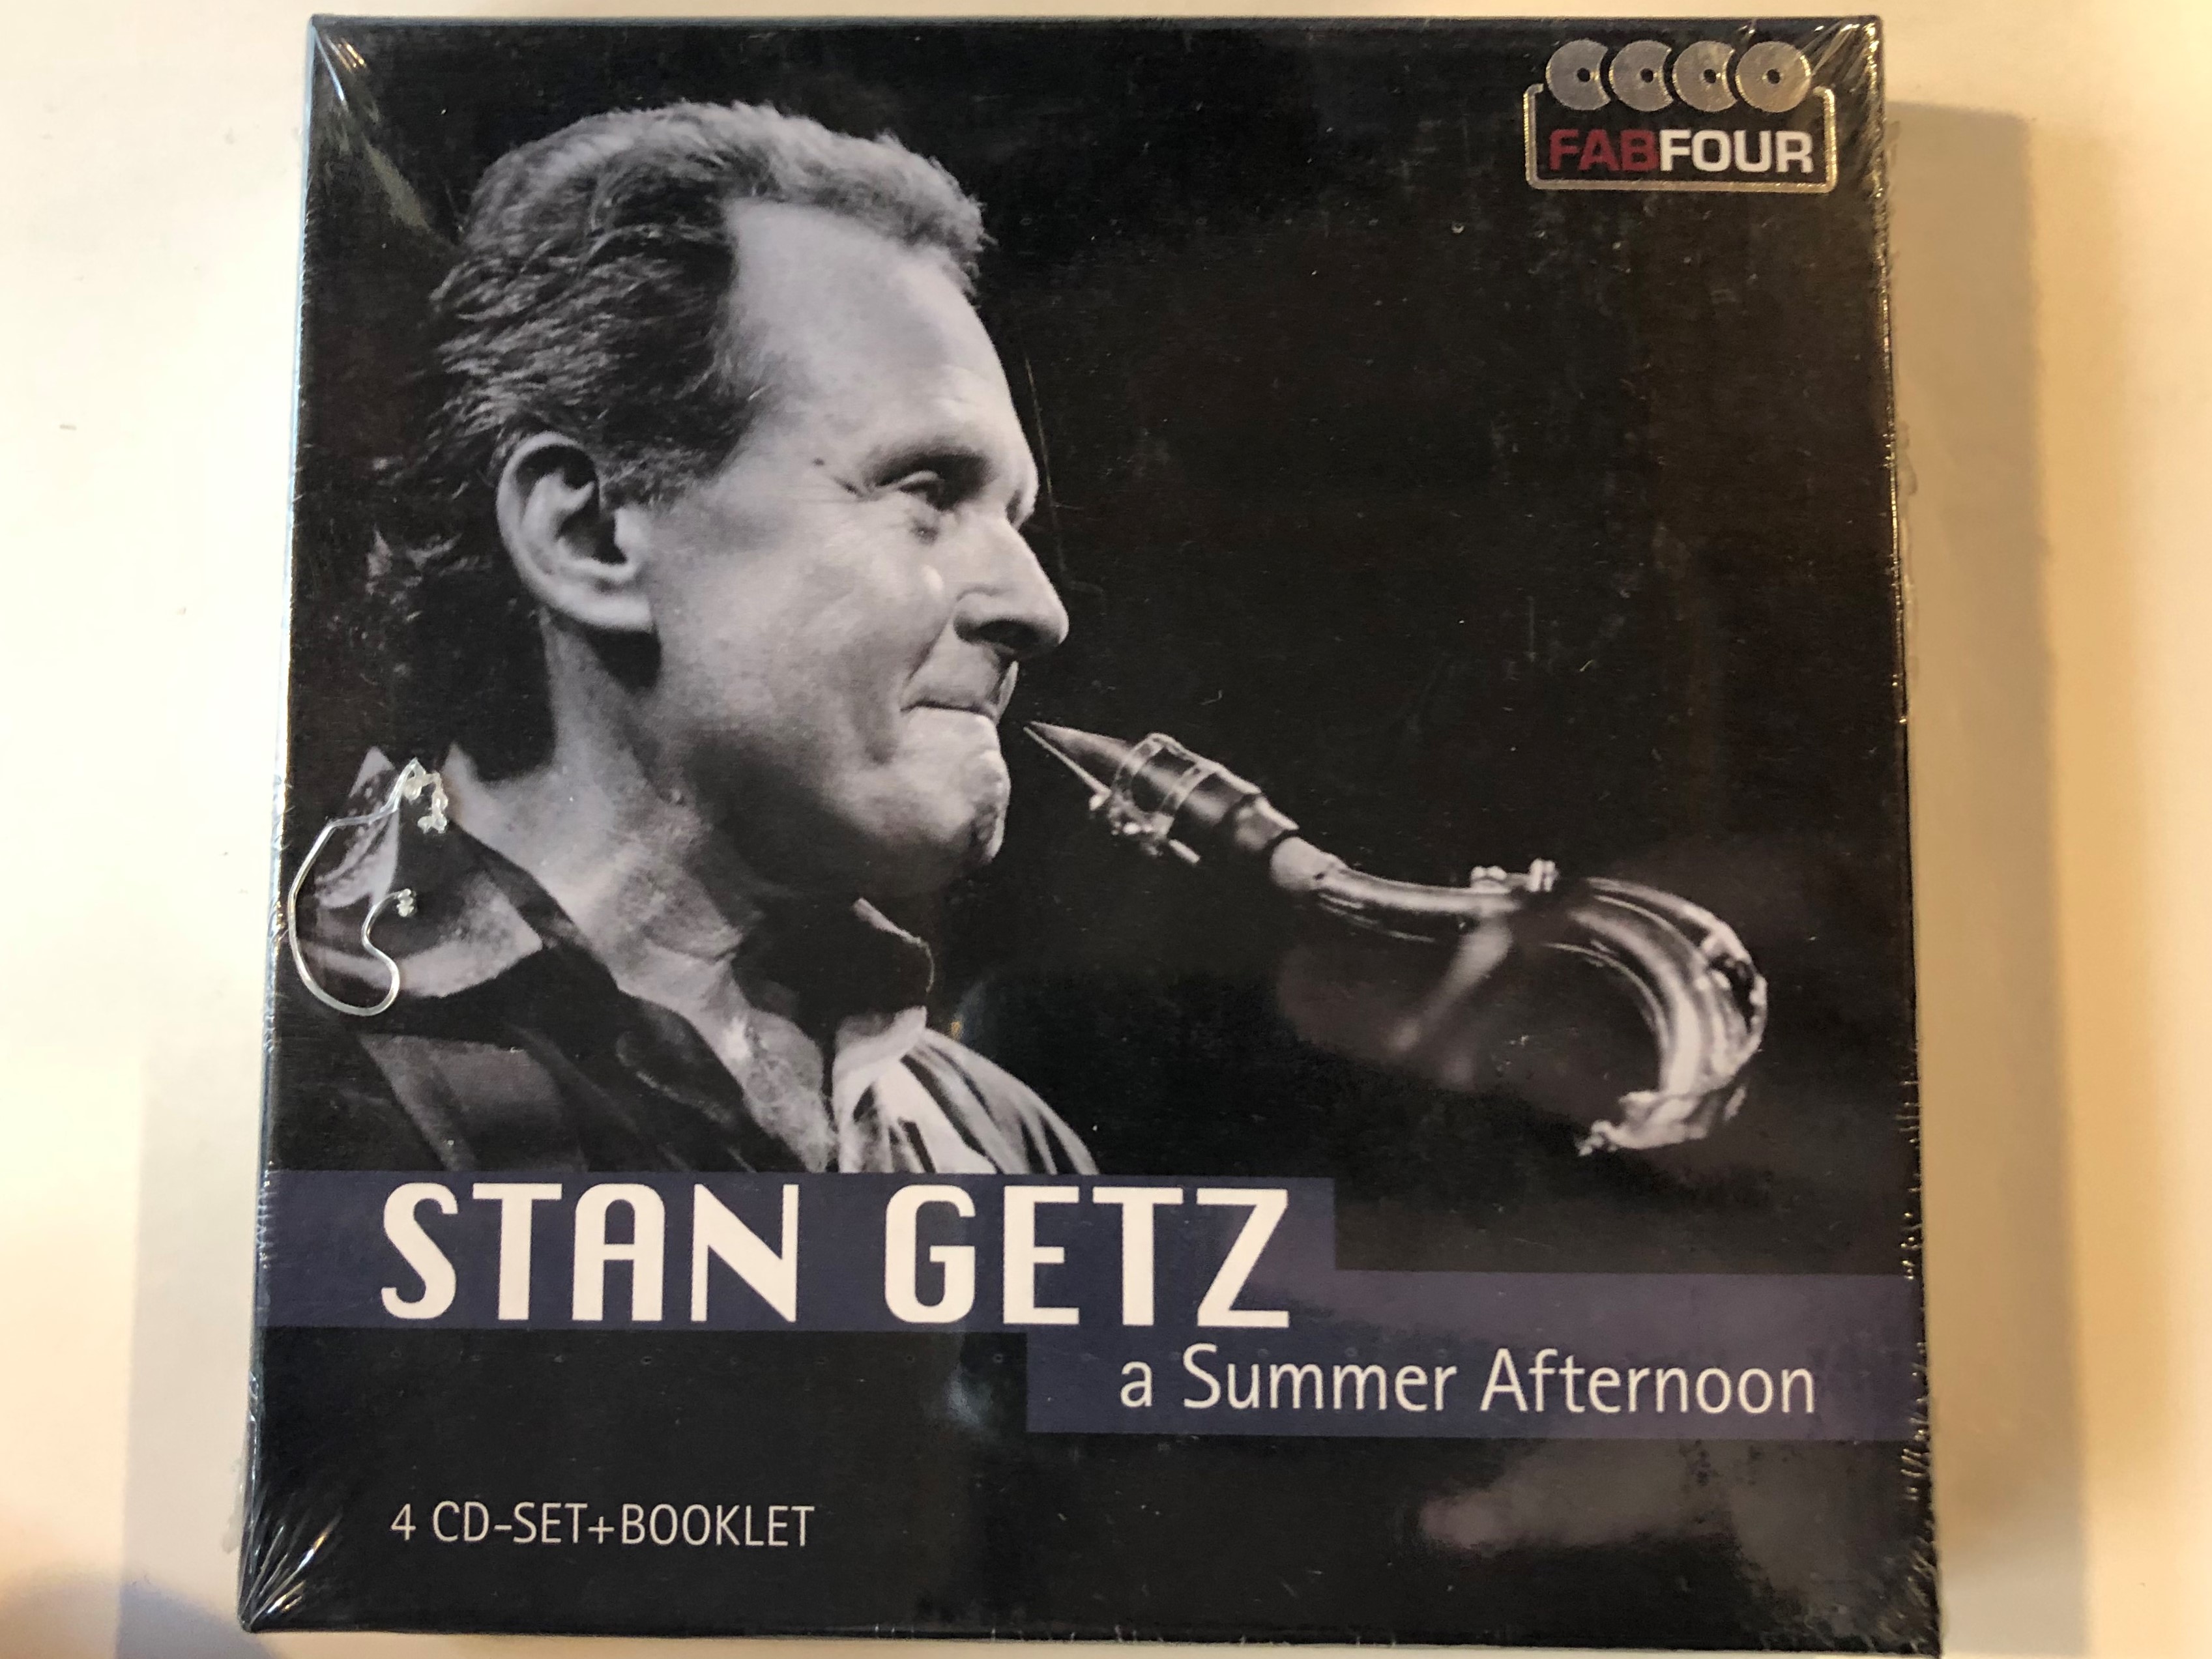 stan-getz-a-summer-afternoon-membran-music-ltd.-4x-audio-cd-set-booklet-mono-stereo-233337-1-.jpg